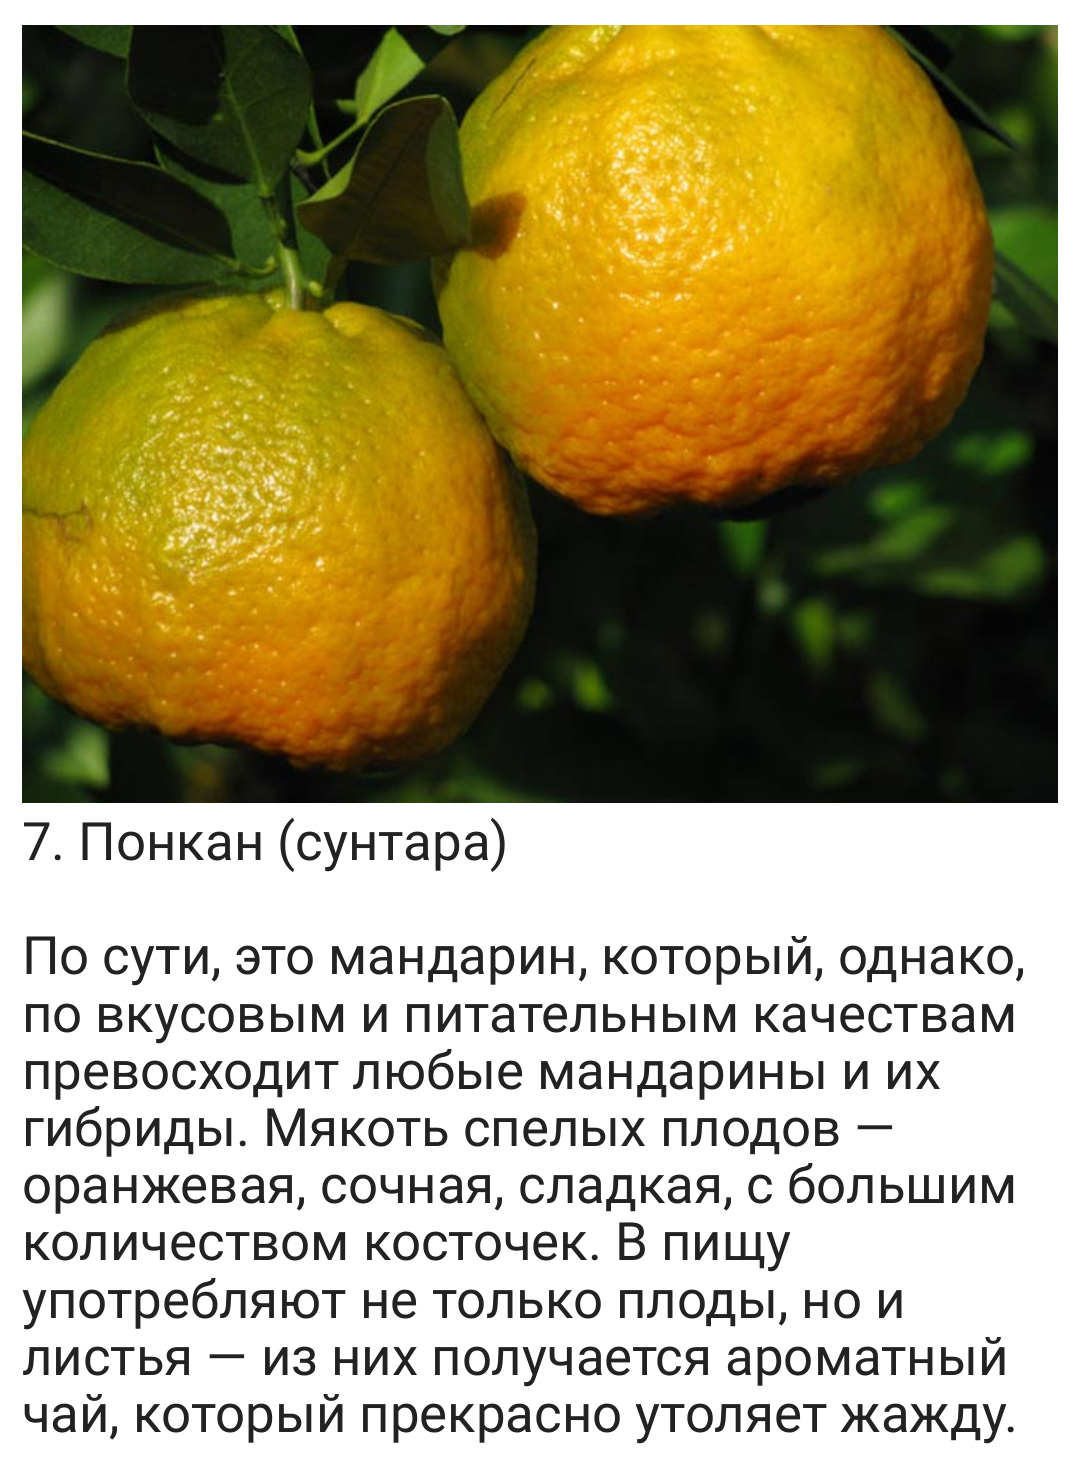 Гибрид лимона как называется. Апельсин мандарин лимон гибрид. Танжело гибриды цитрусовых. Сорт мандарин гибридов. Лимон померанец гибрид.